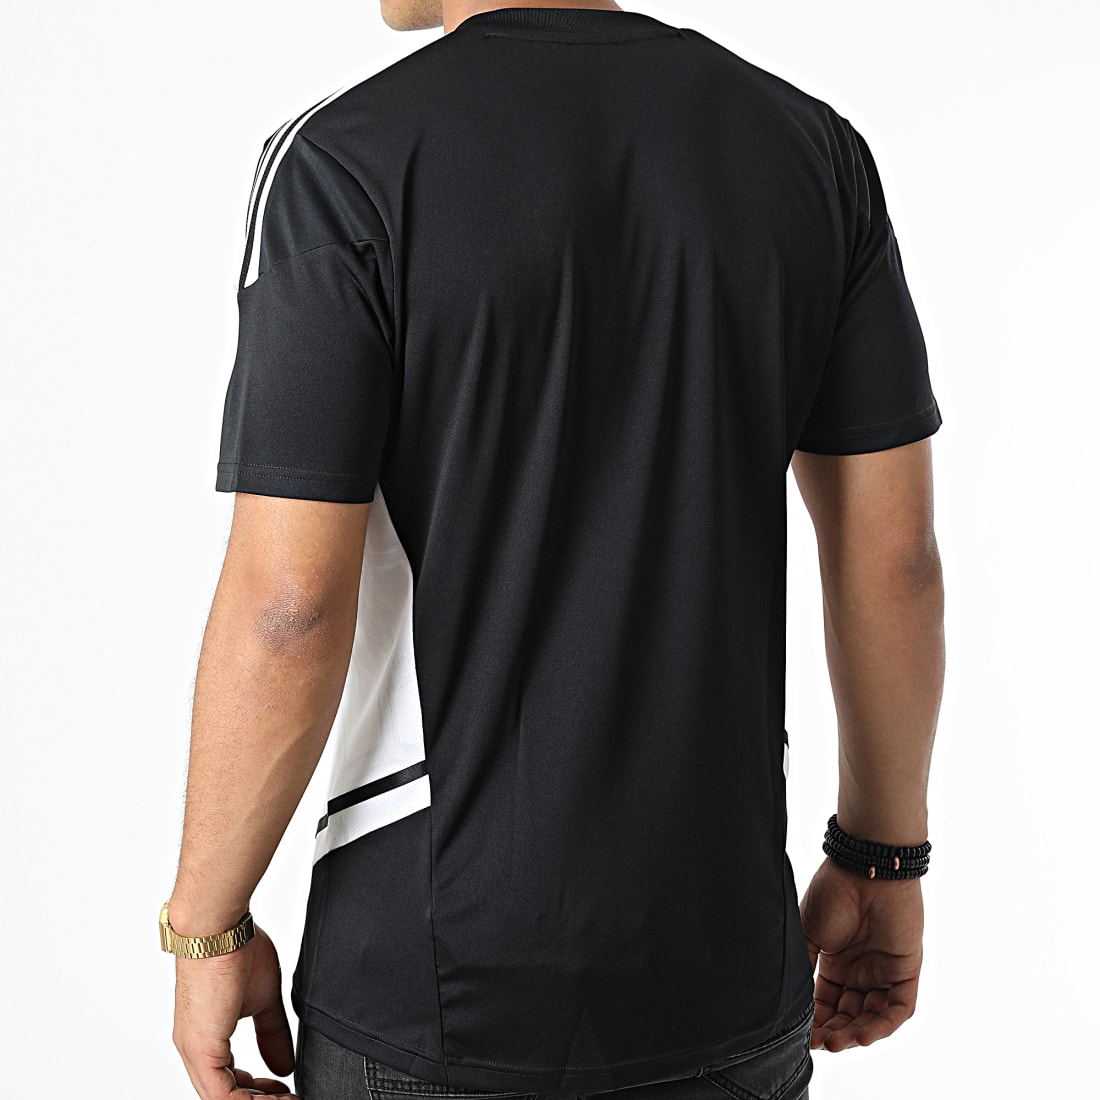 Adidas Originals - Tee Shirt A Bandes 3 Stripes GN3495 Noir 